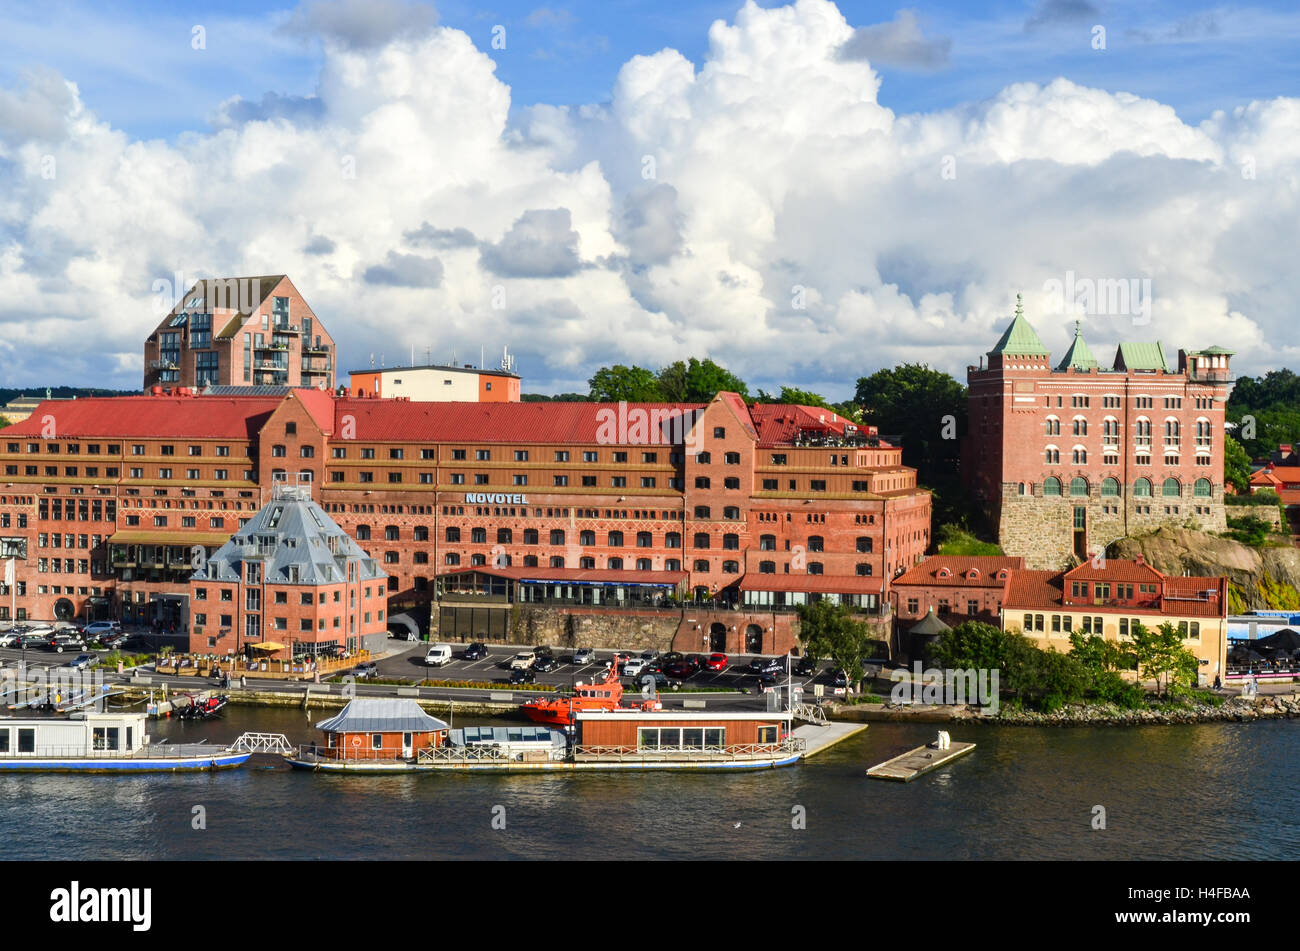 City of Goteborg/Gothenburg, Sweden Stock Photo